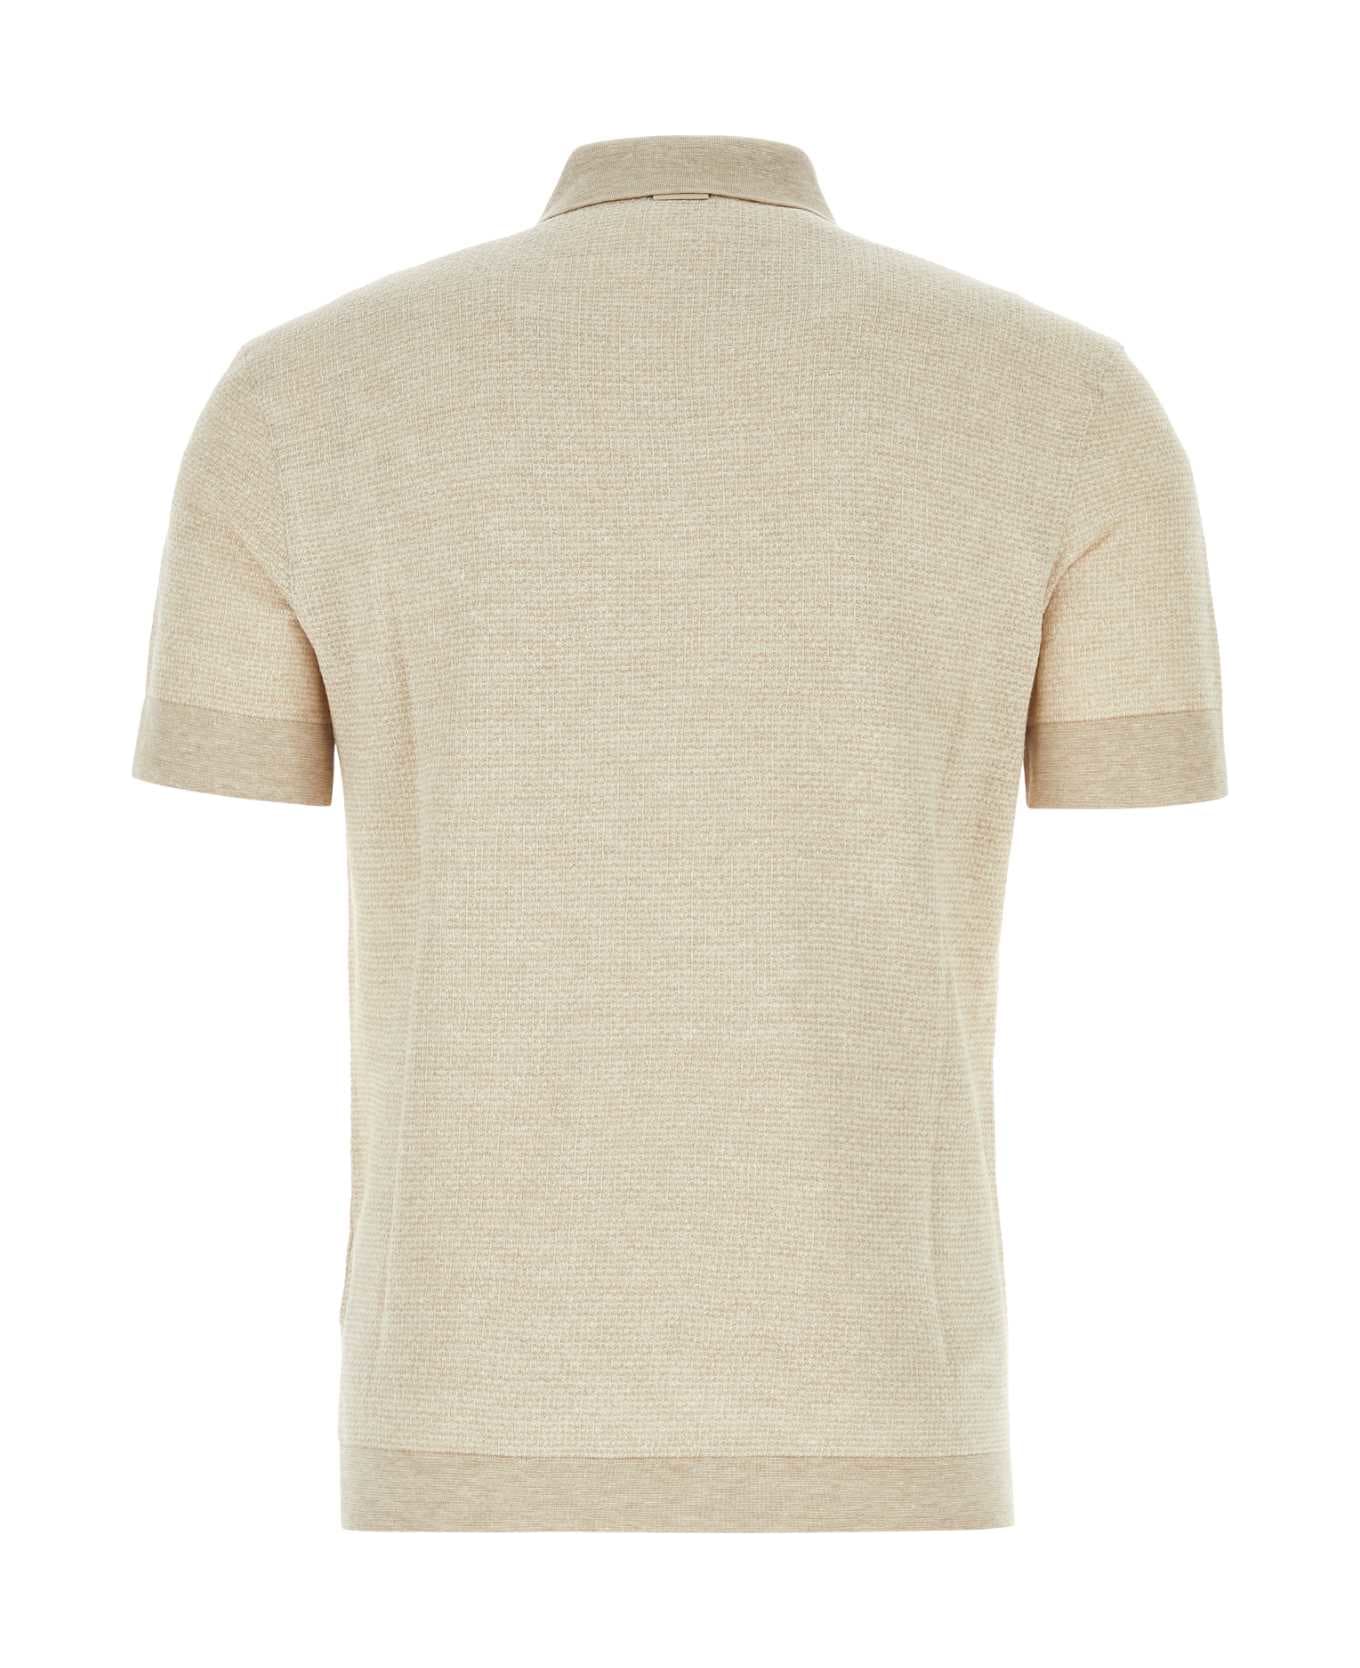 Zegna Sand Cotton Blend Polo Shirt - N03 ポロシャツ